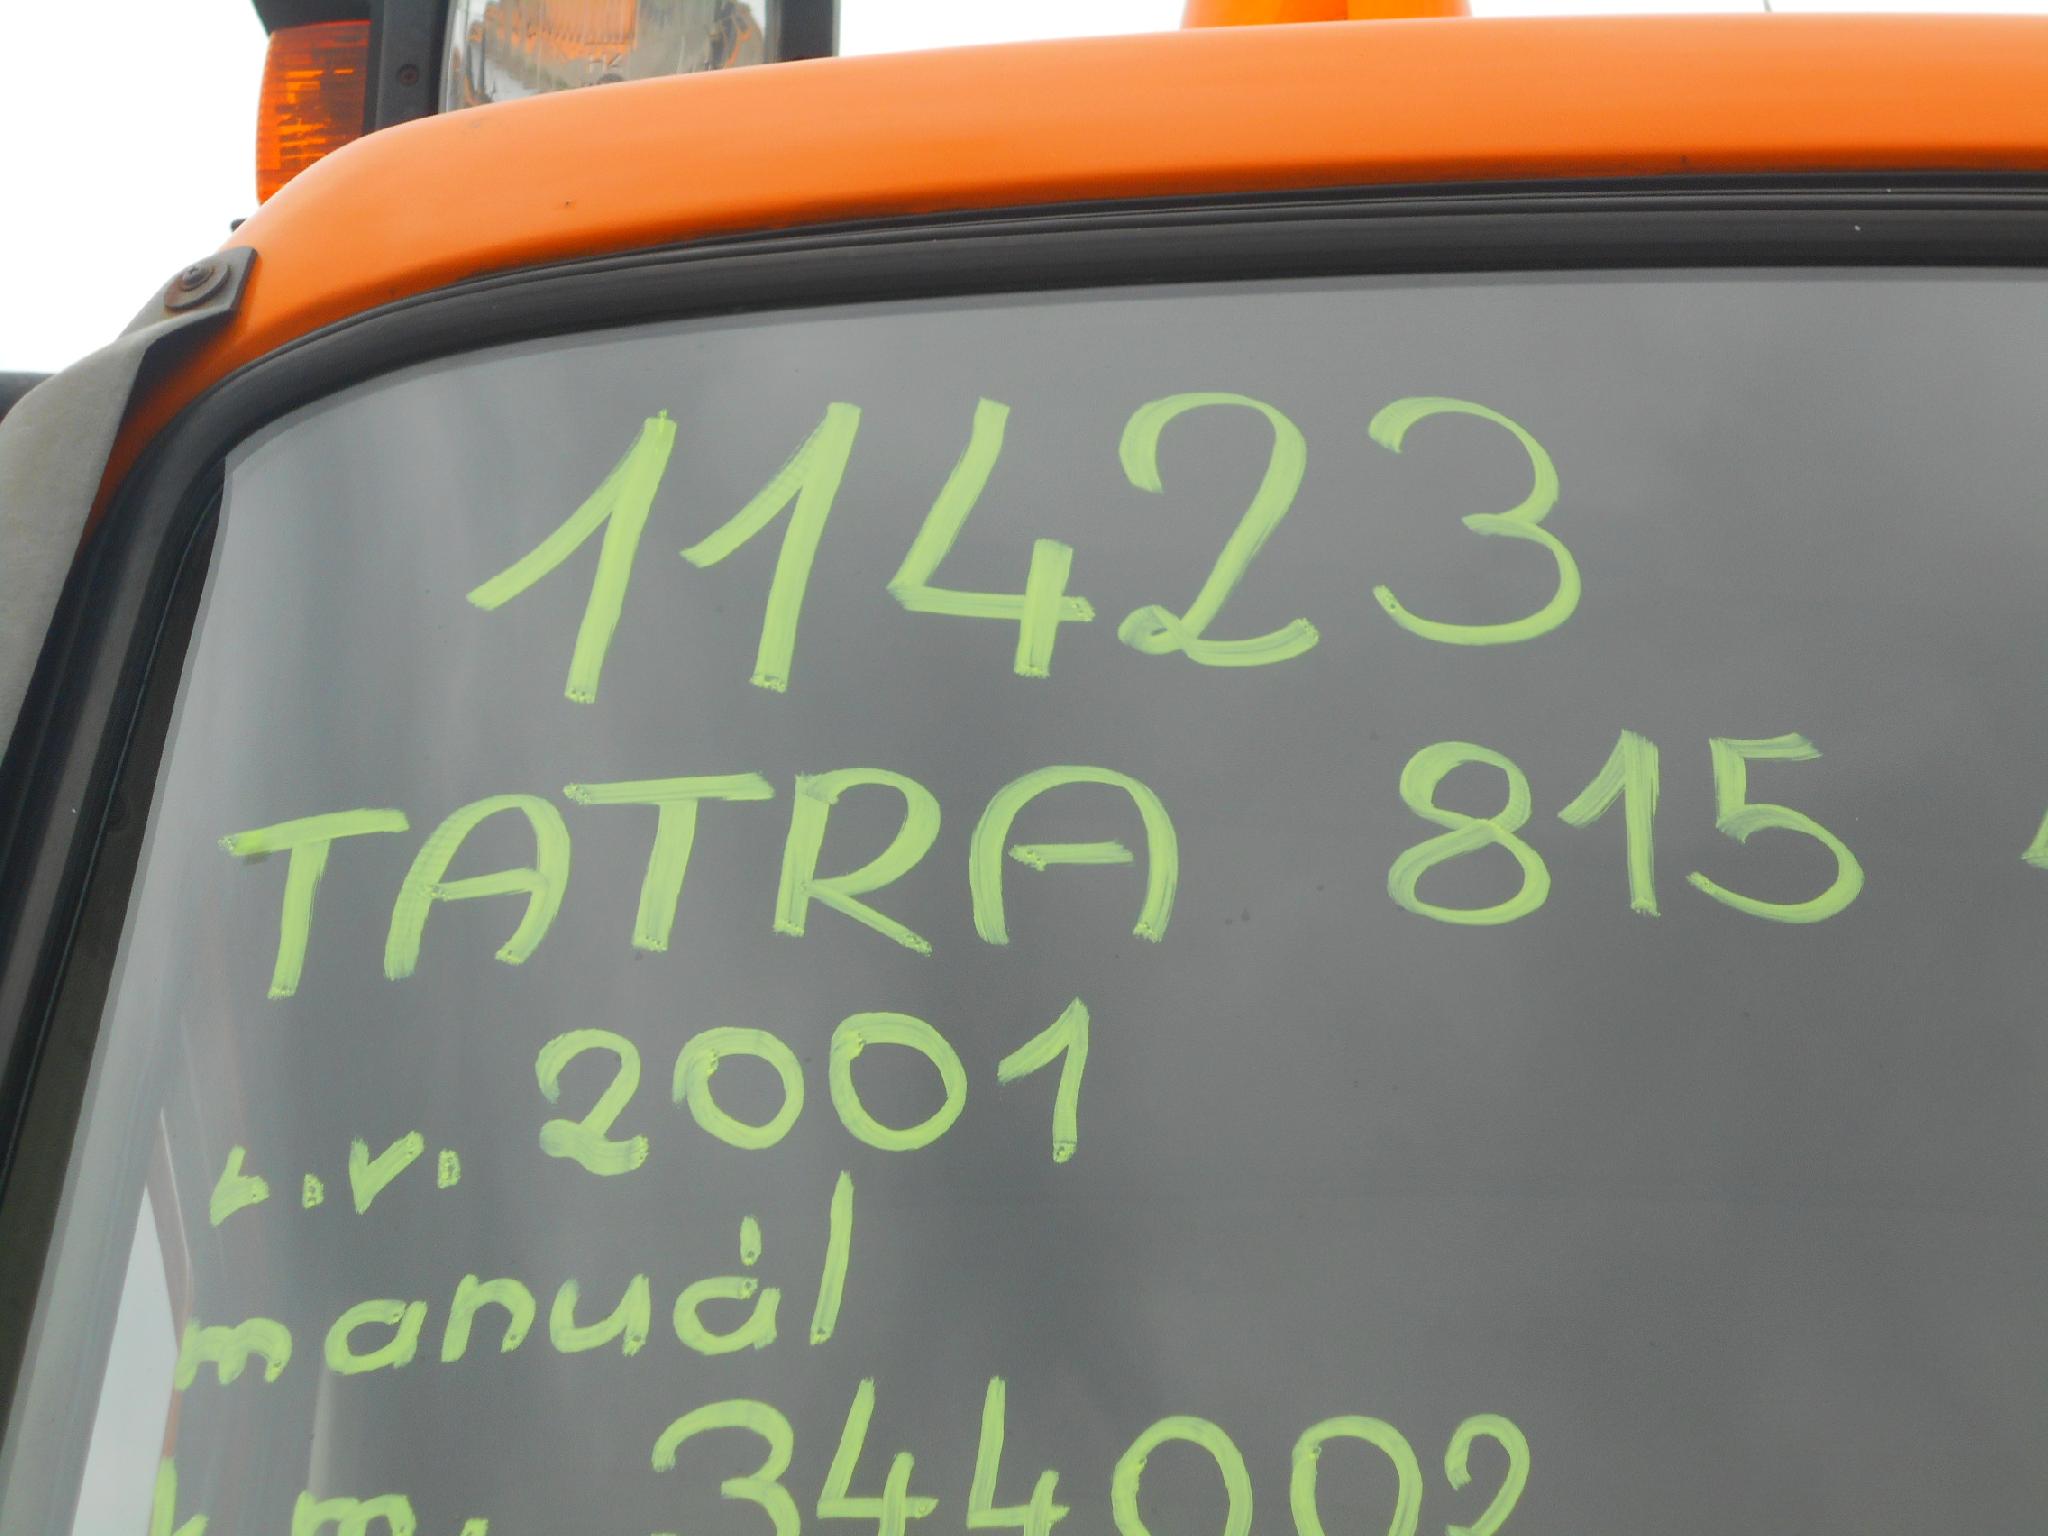 Vozidlo TATRA 815 4x4.2